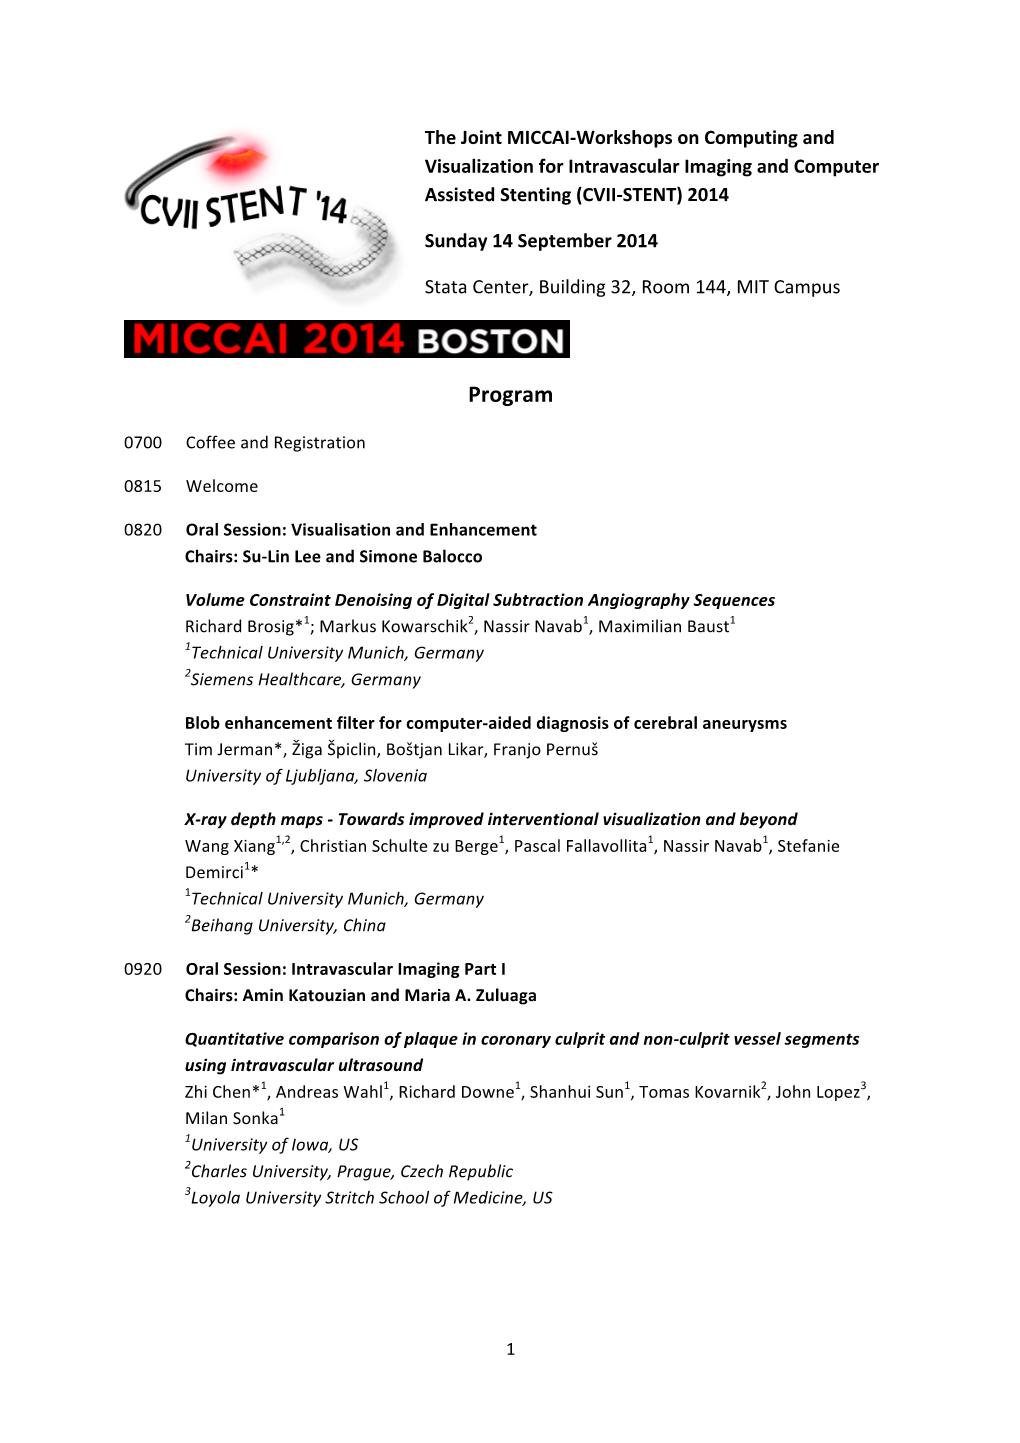 CVII-STENT 2014 Program Final